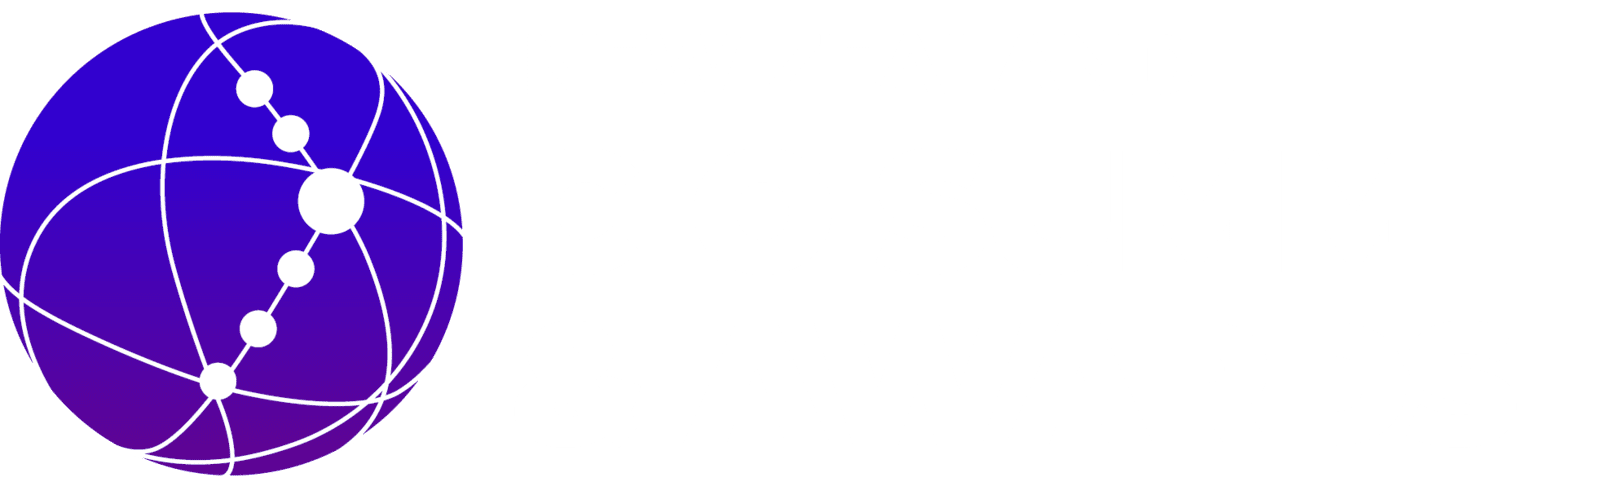 CIO Summit New Zealand